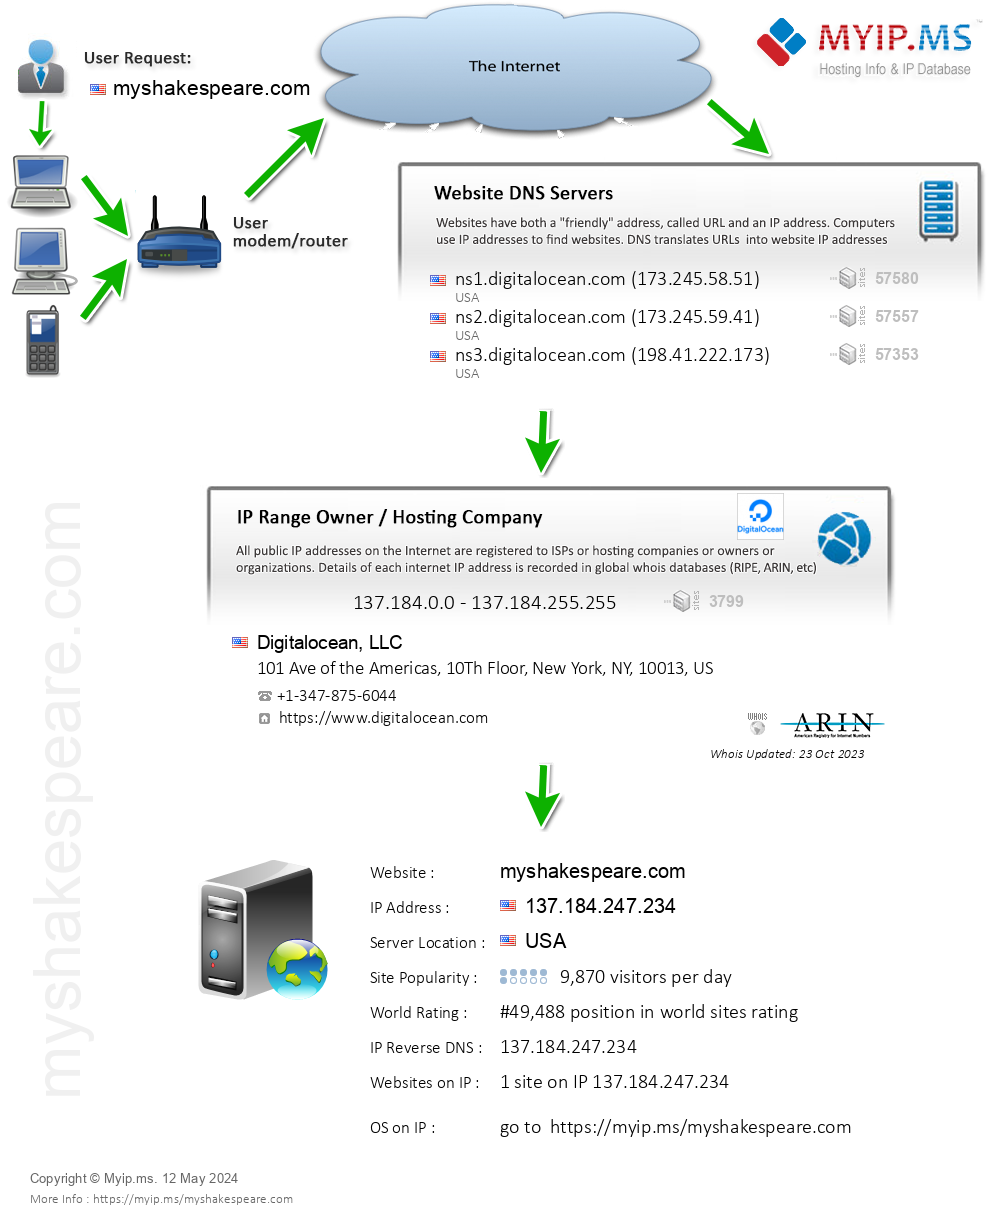 Myshakespeare.com - Website Hosting Visual IP Diagram